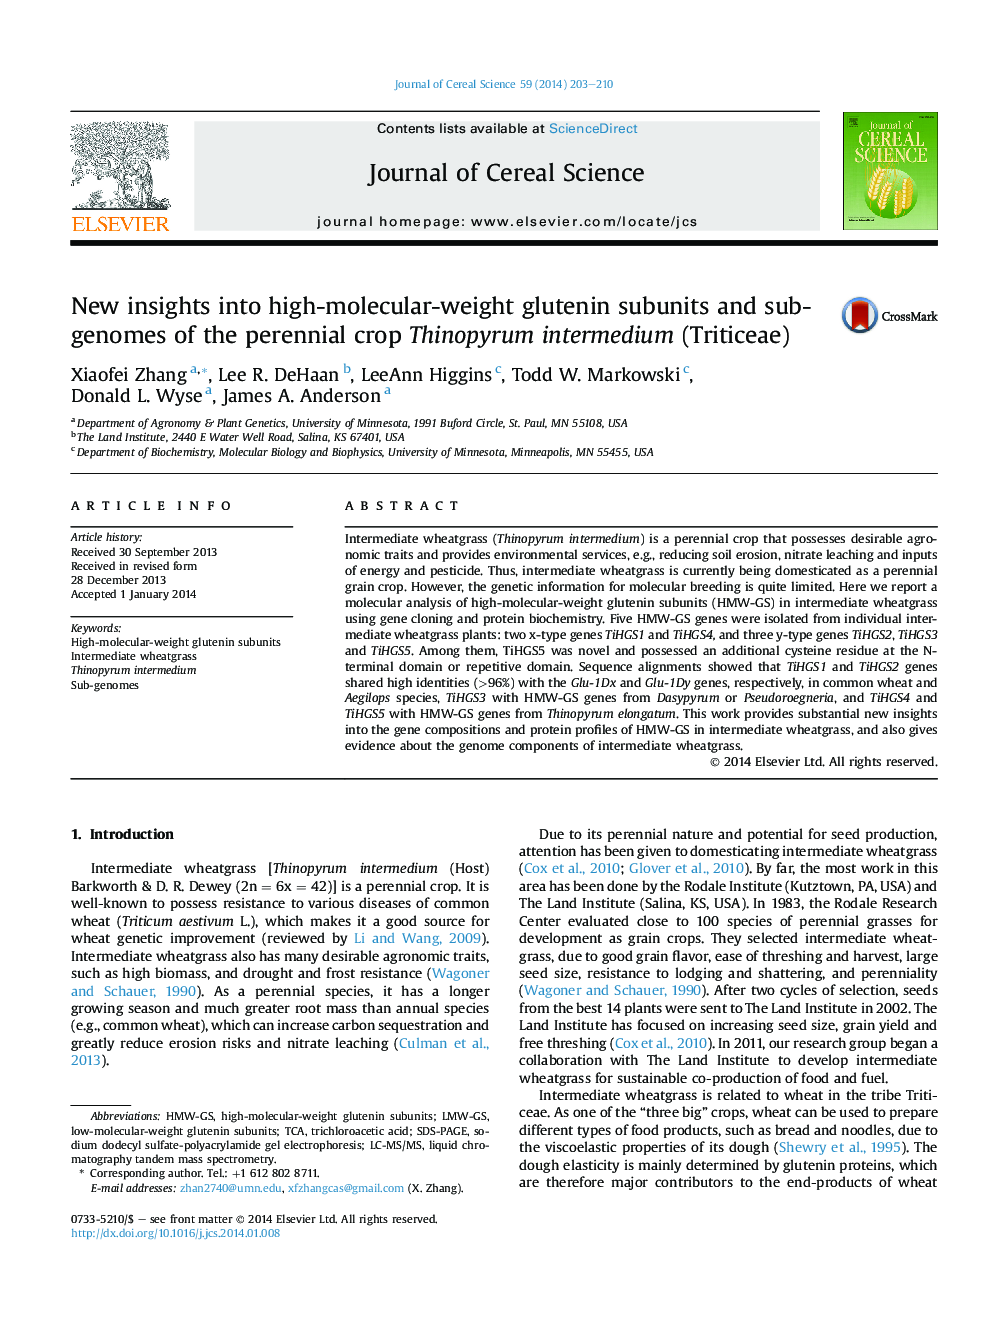 New insights into high-molecular-weight glutenin subunits and sub-genomes of the perennial crop Thinopyrum intermedium (Triticeae)